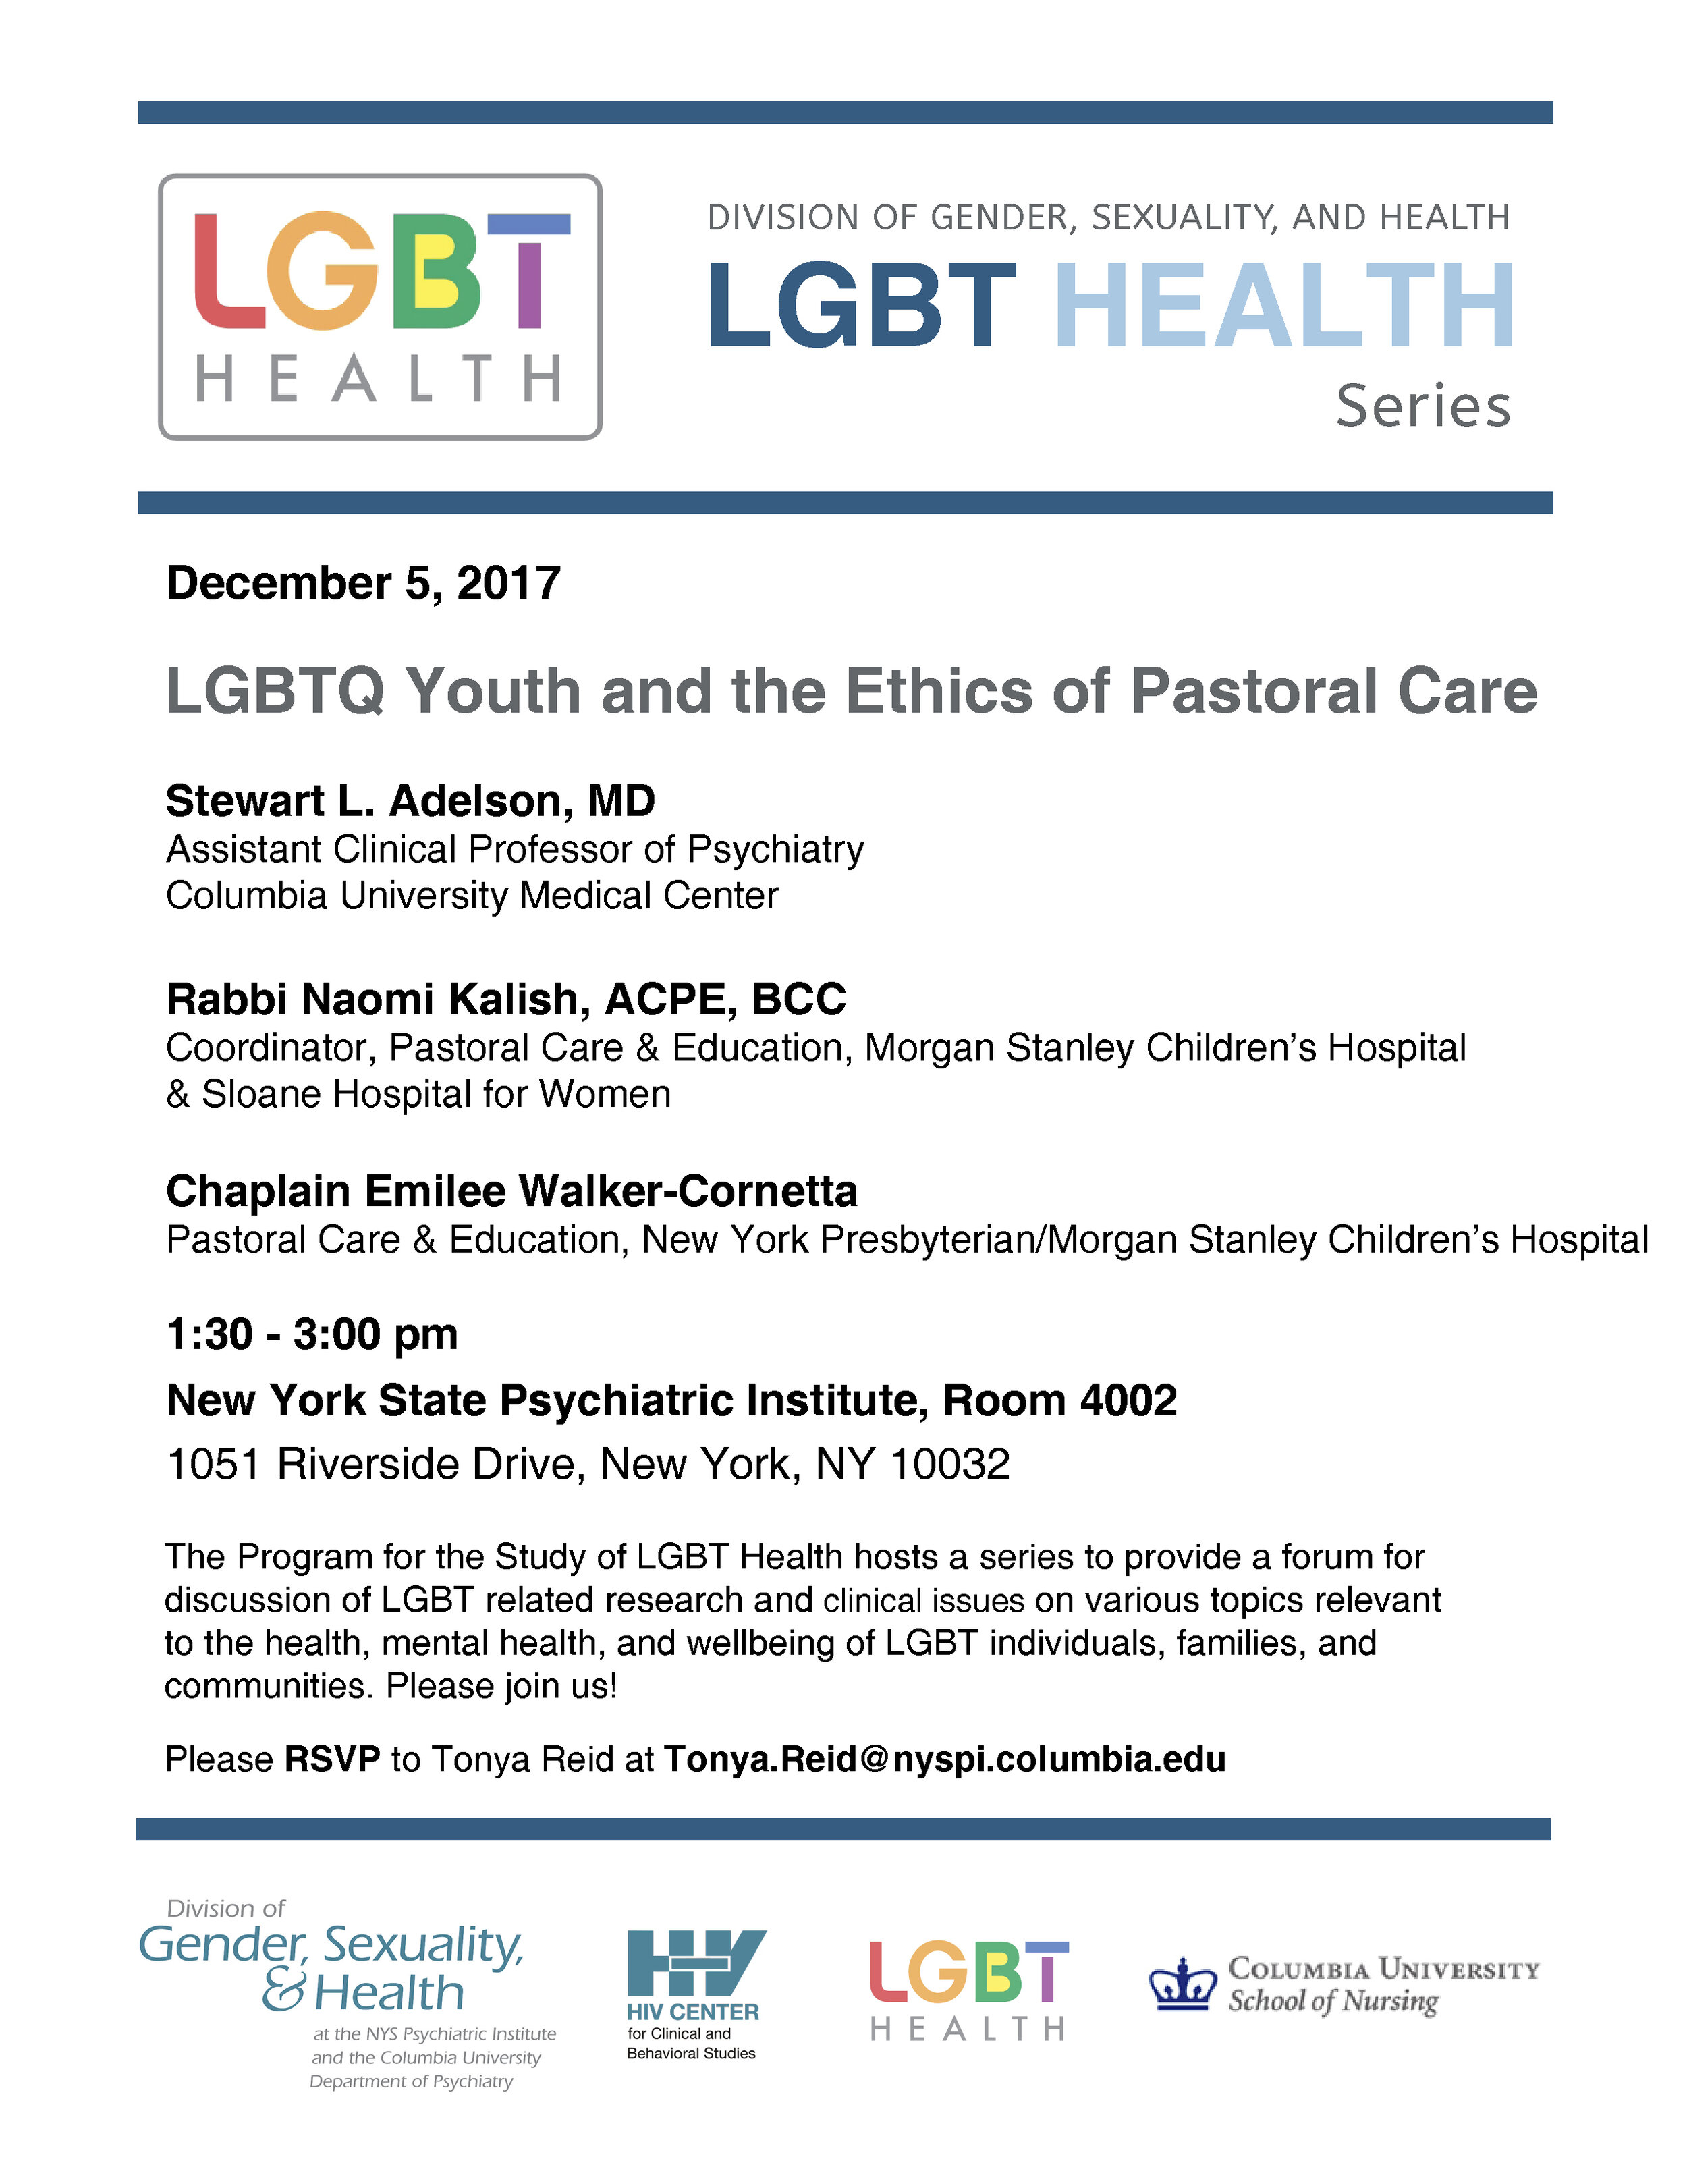 LGBT Health Series Dec 5 2017.jpg